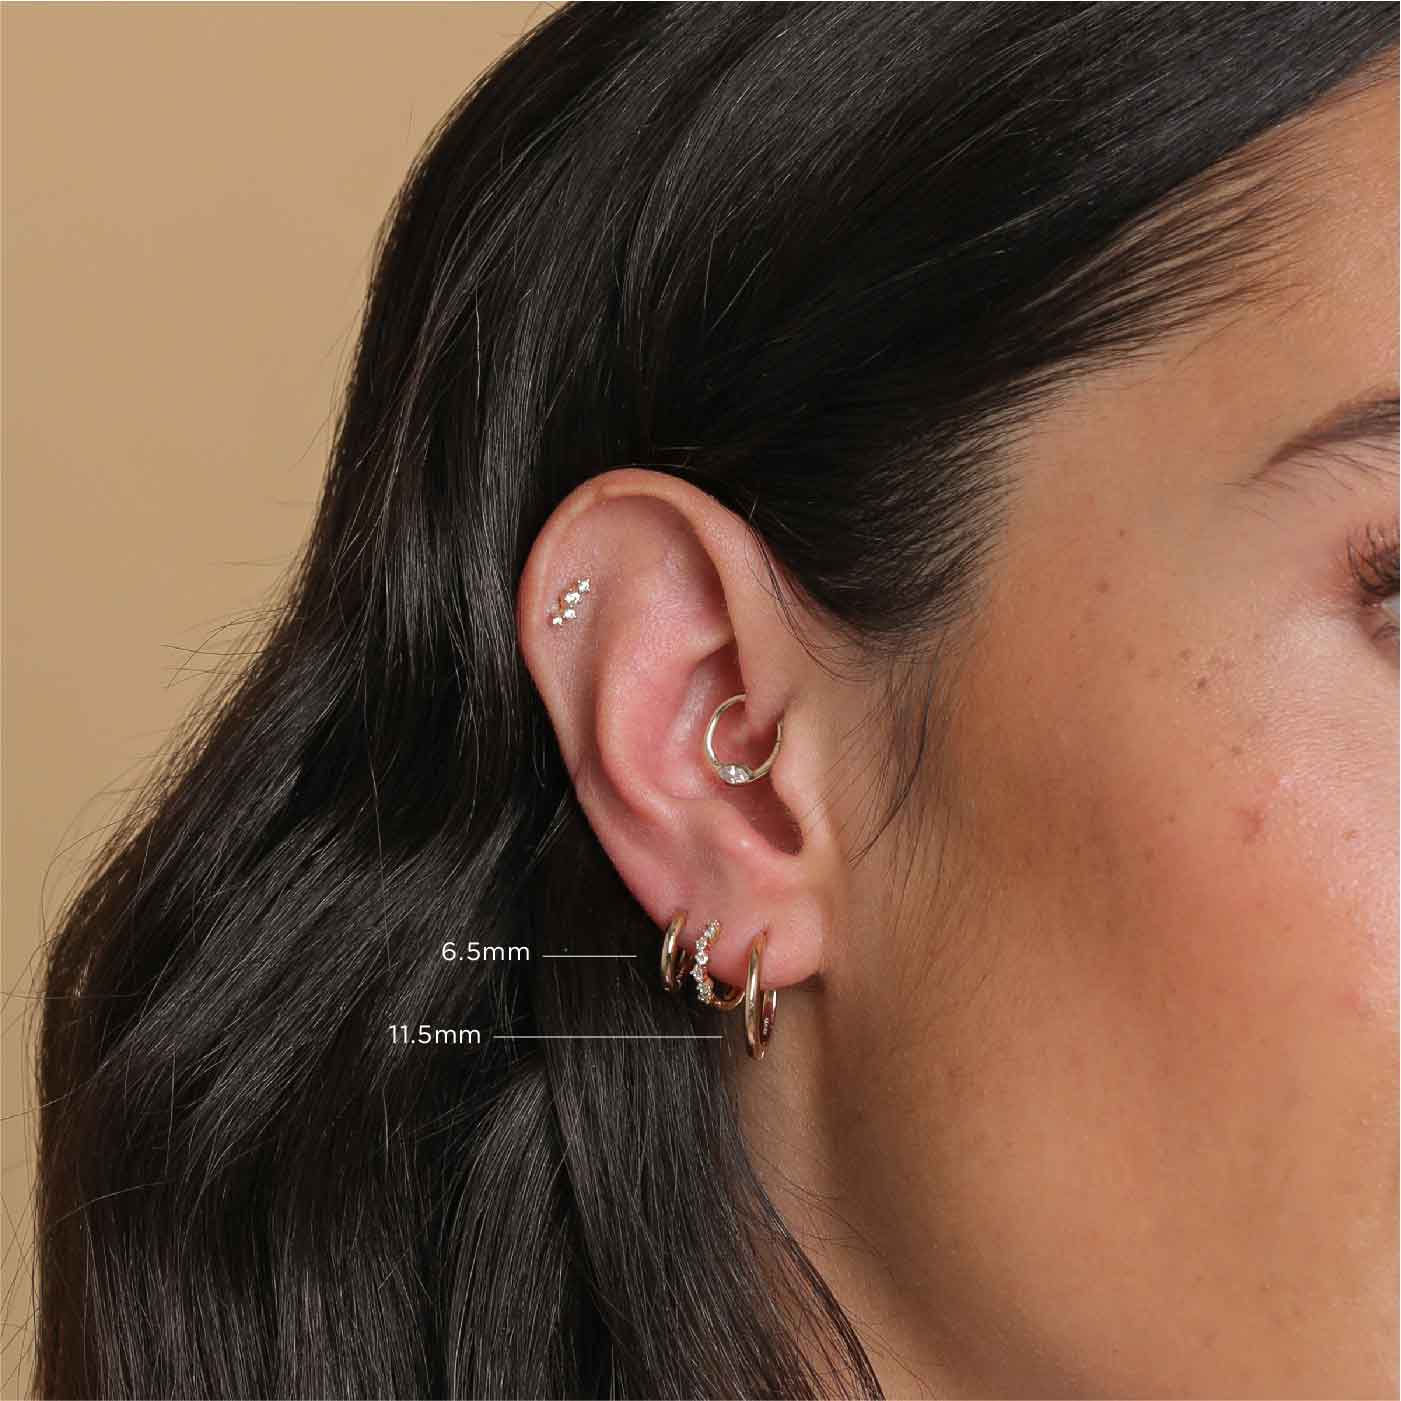 Cartilage Earrings  SkinKandy  SkinKandy  Body Jewellery  Piercing  Online Australia